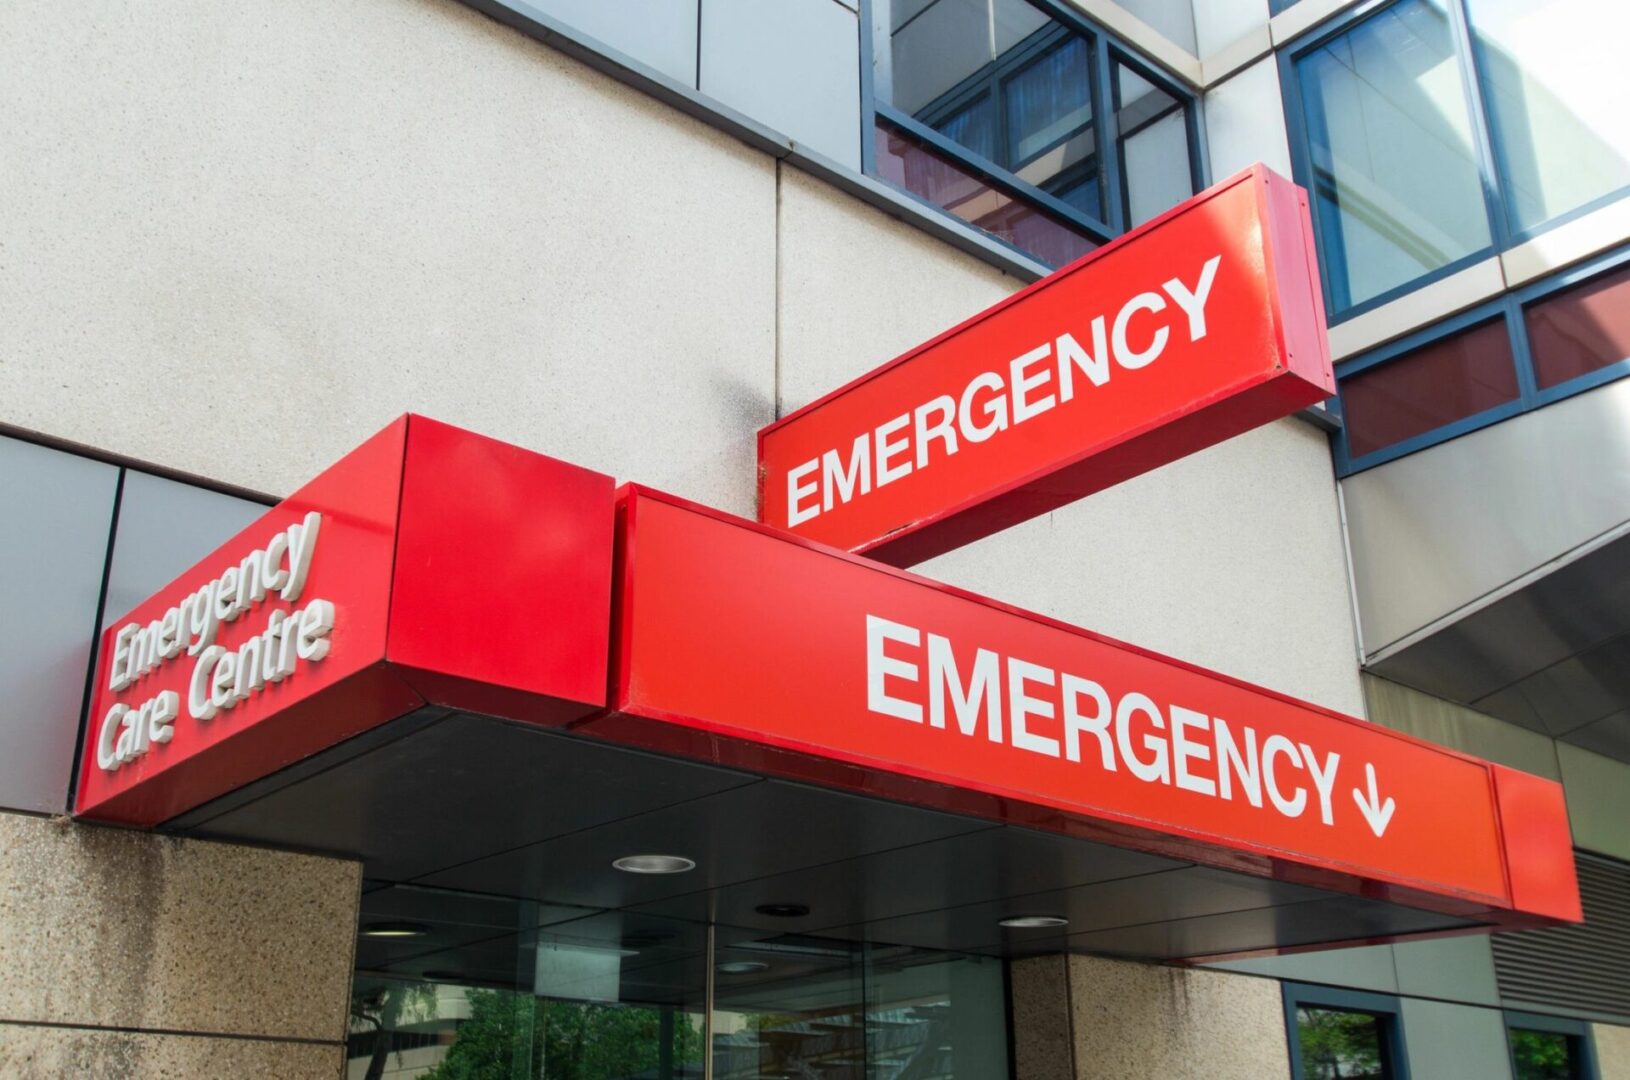 Emergency room entrance